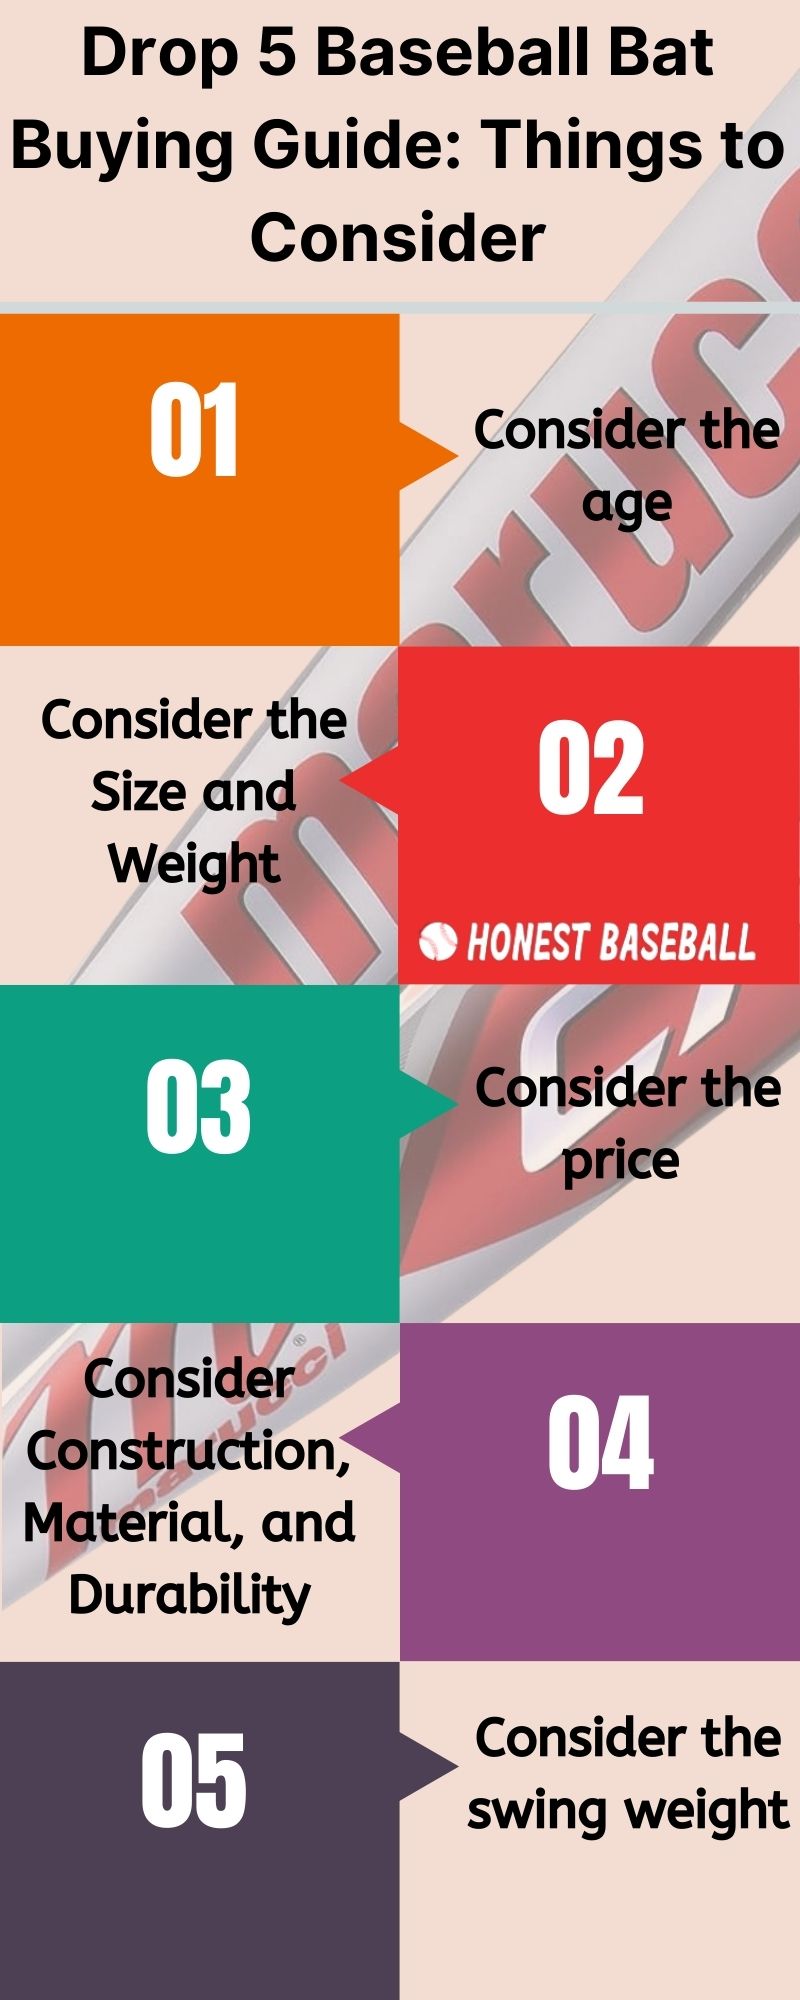 Drop 5 Baseball Bat Buying Guide- Things to Consider